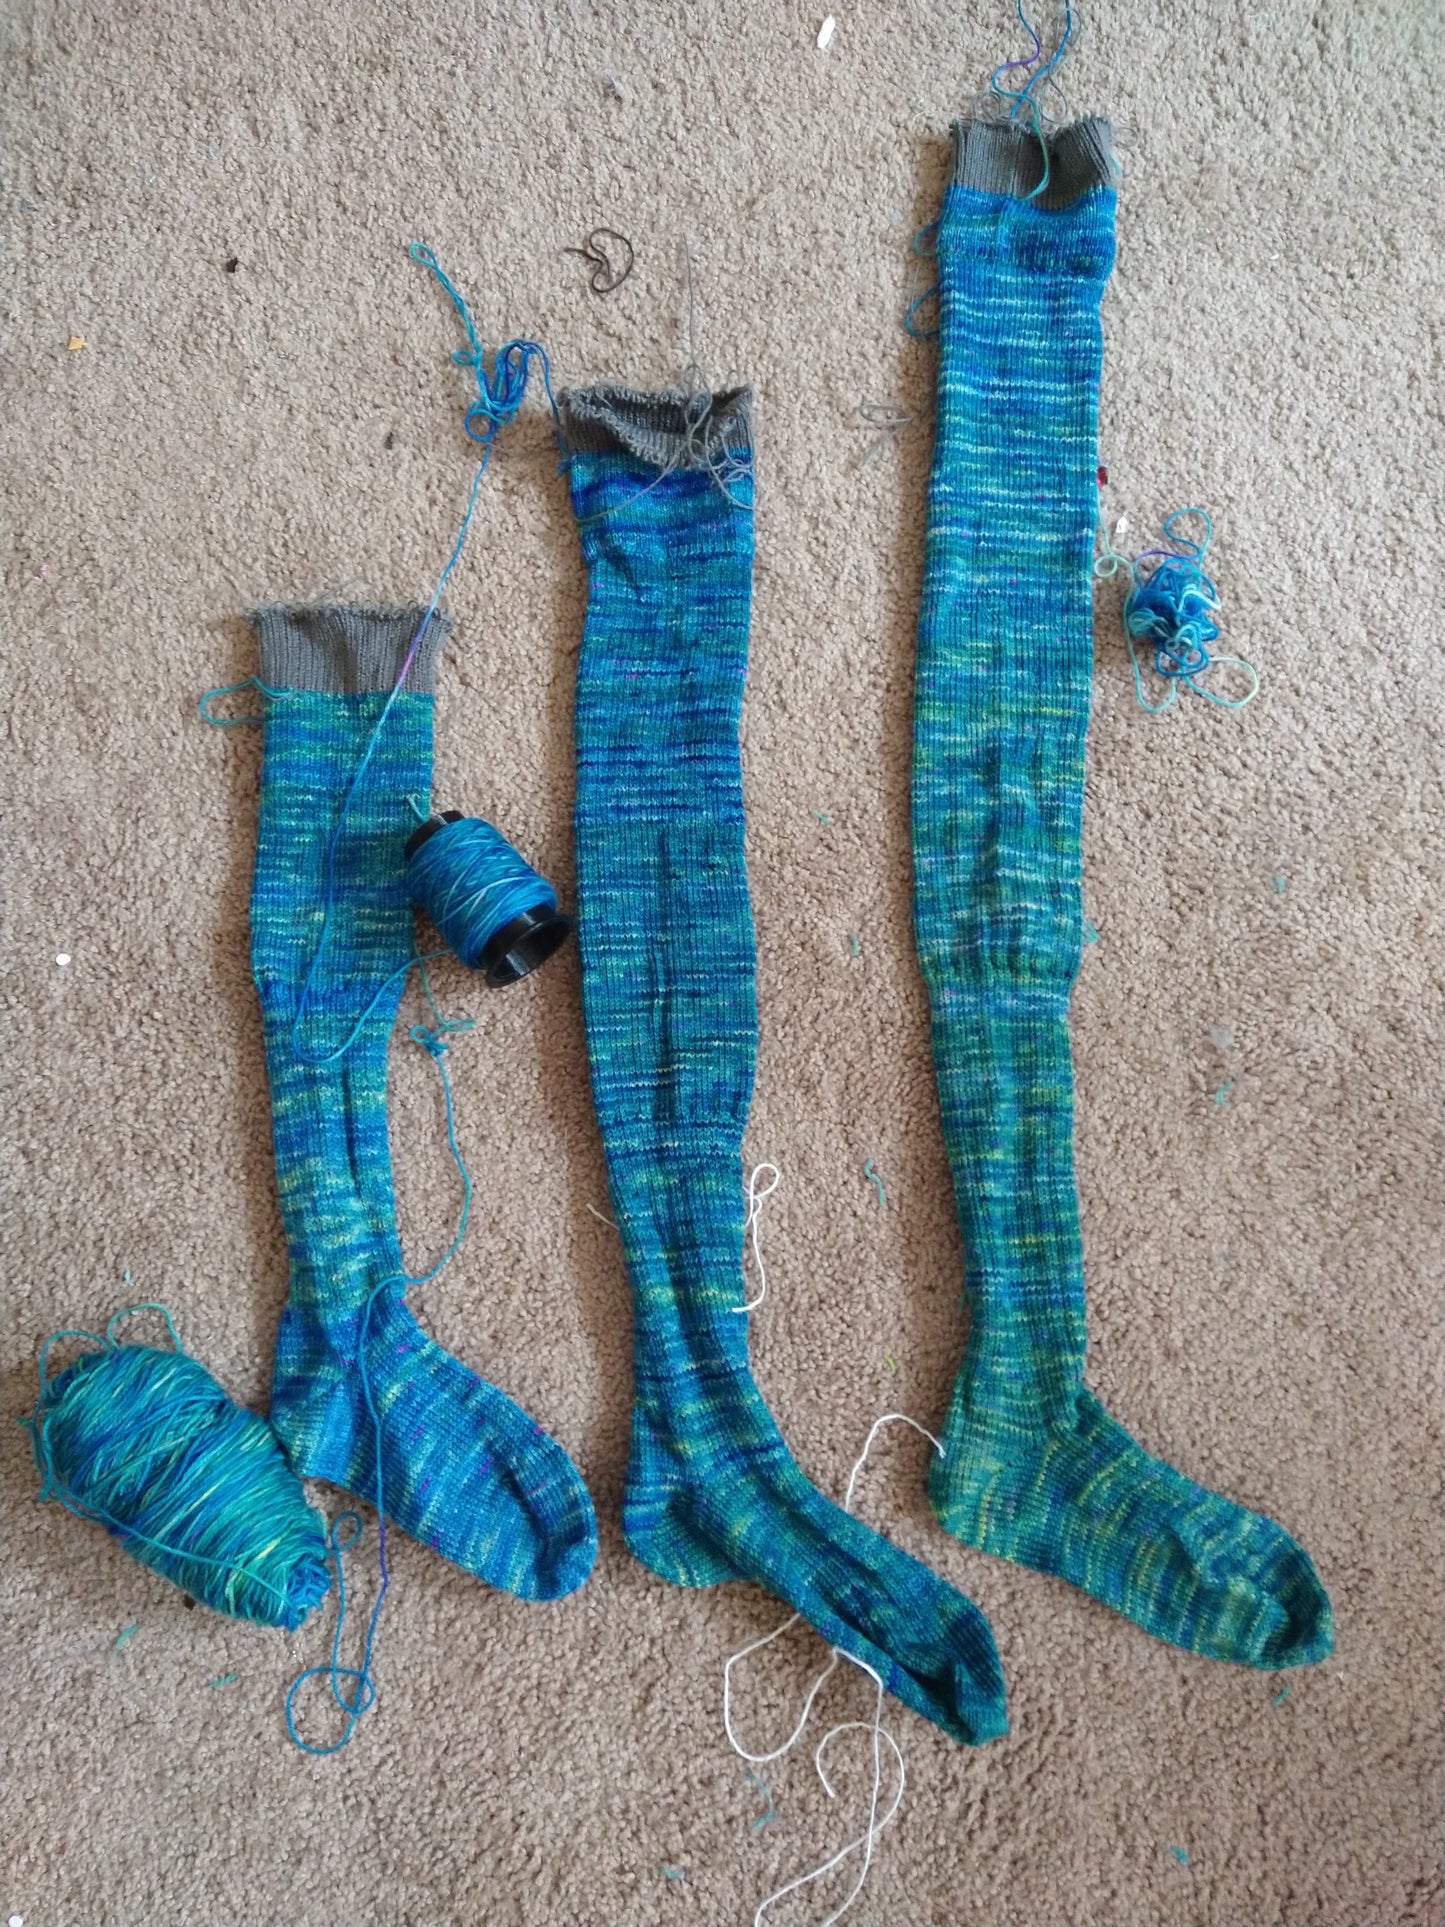 My yarn, My sock knitting machine, Your socks